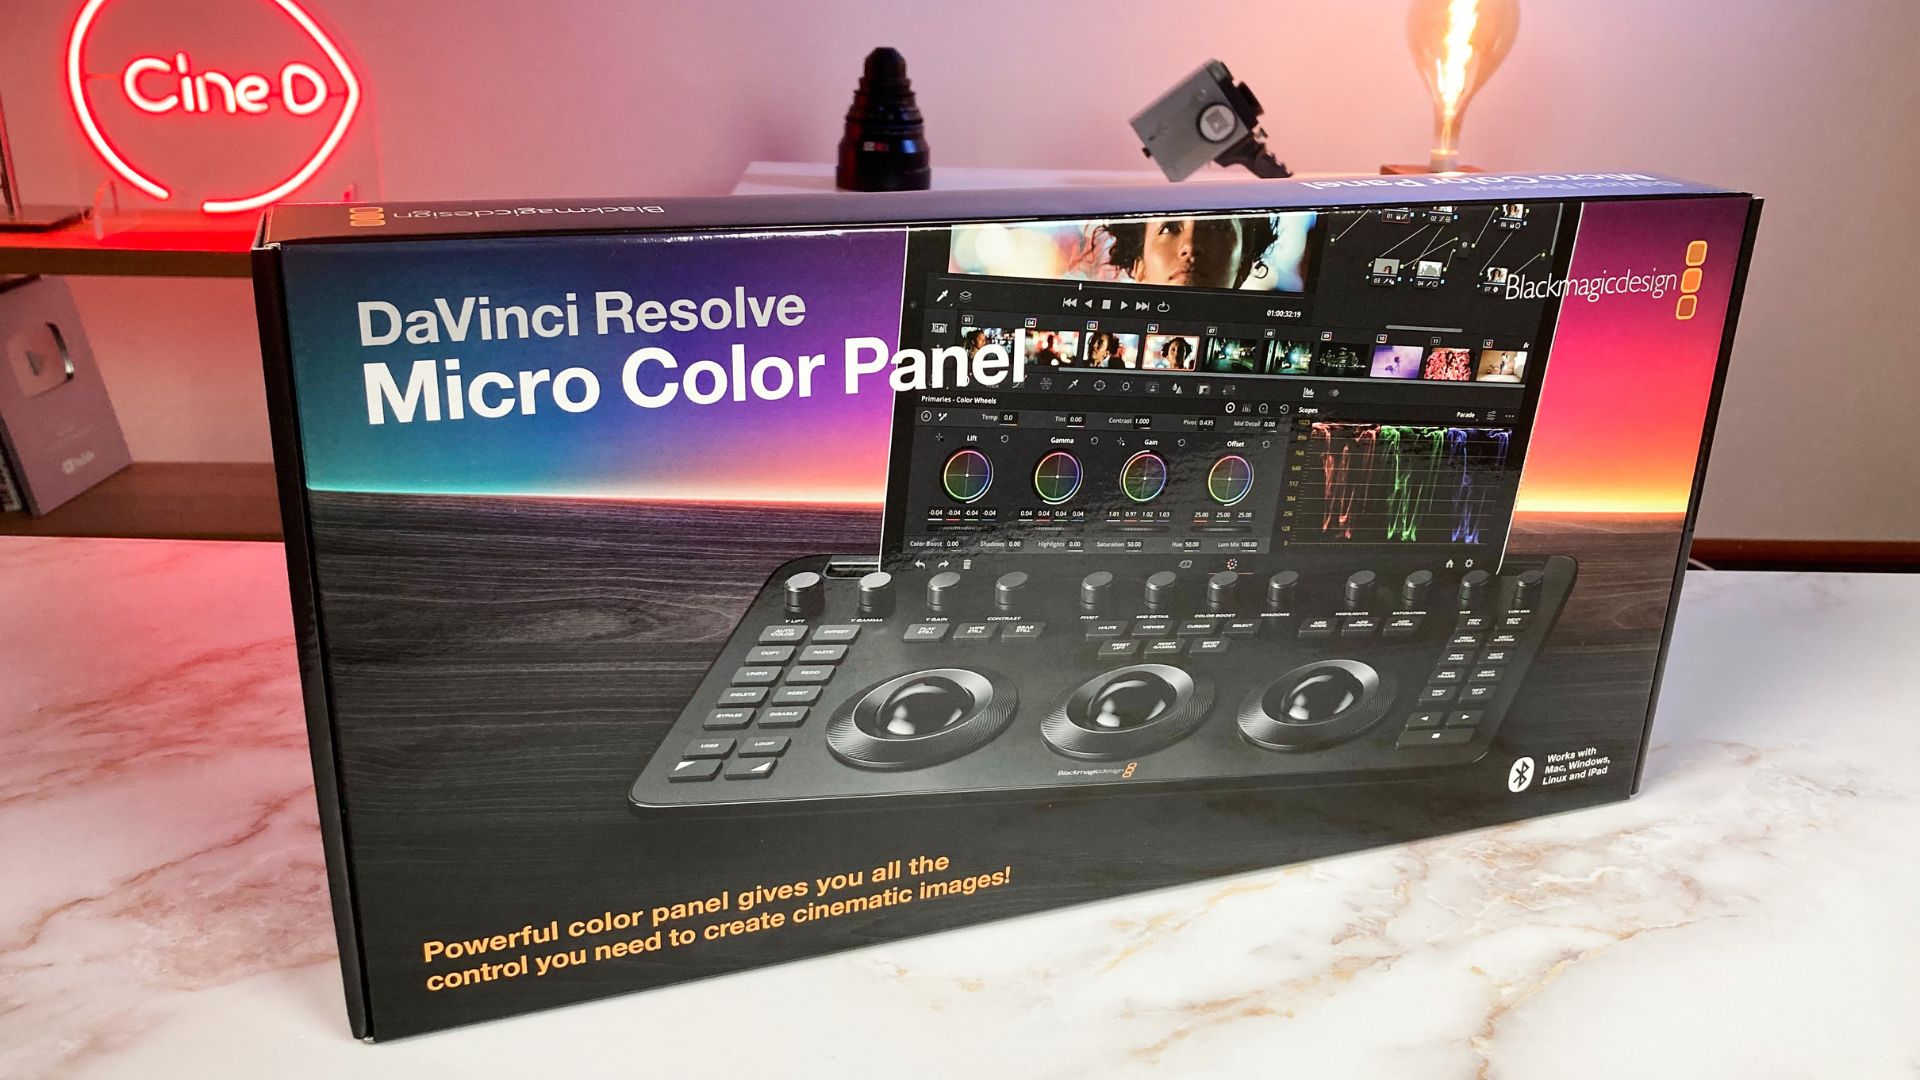 DaVinci Resolve Micro Color Panel - First impressions